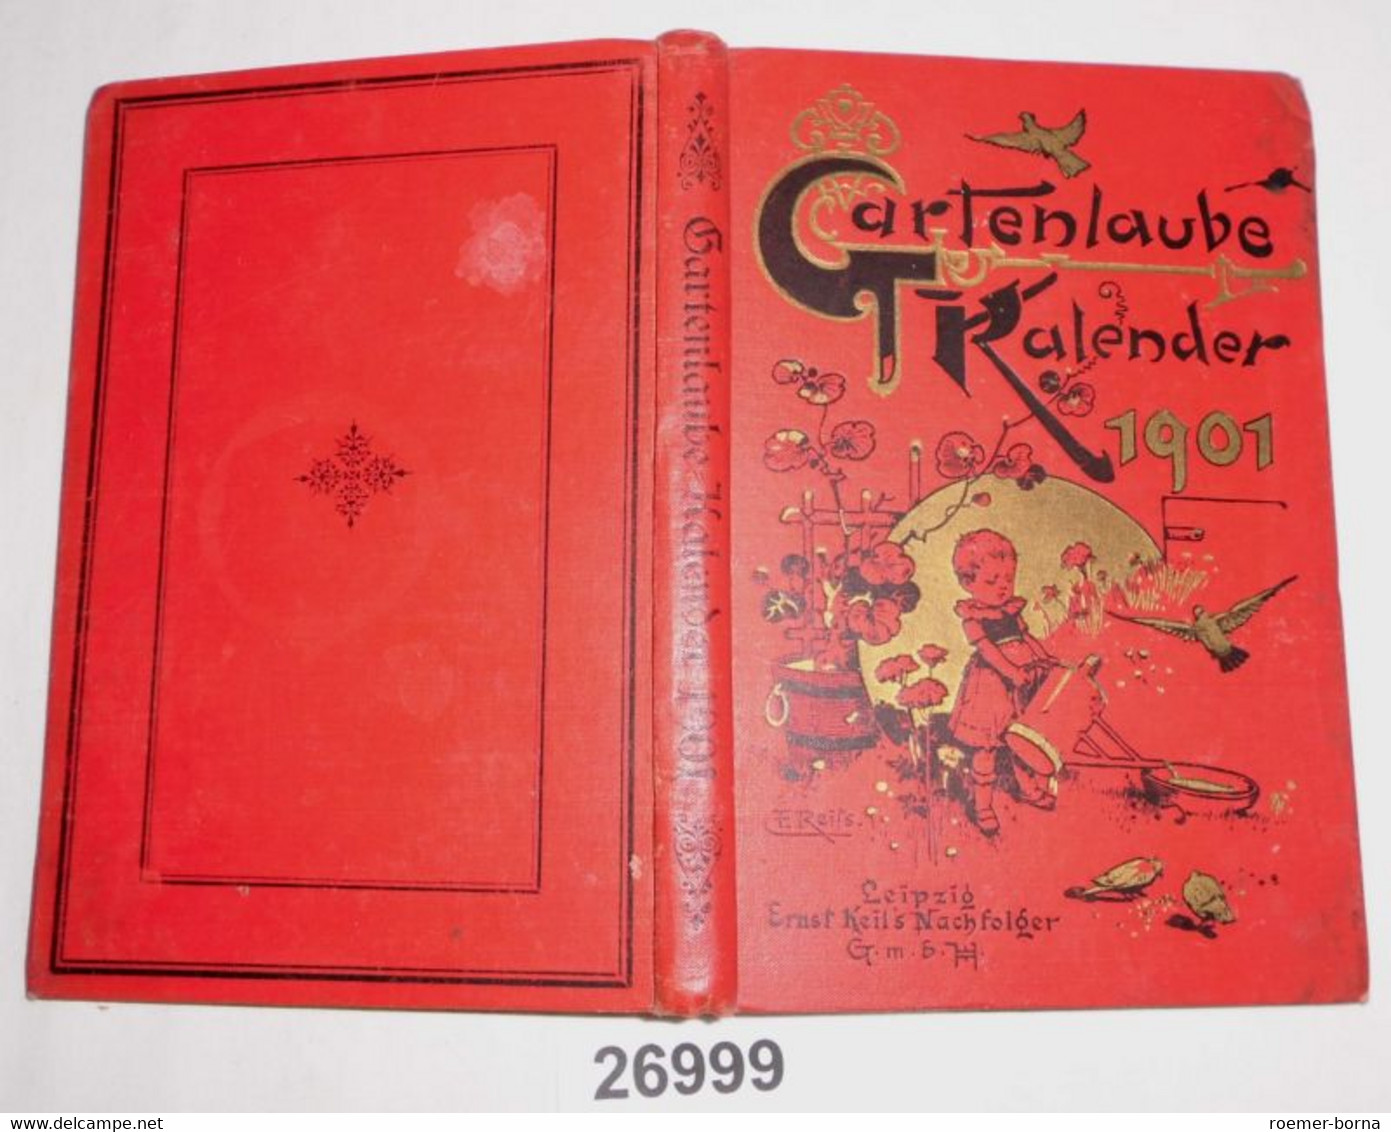 Gartenlaube-Kalender 1901 - Calendars